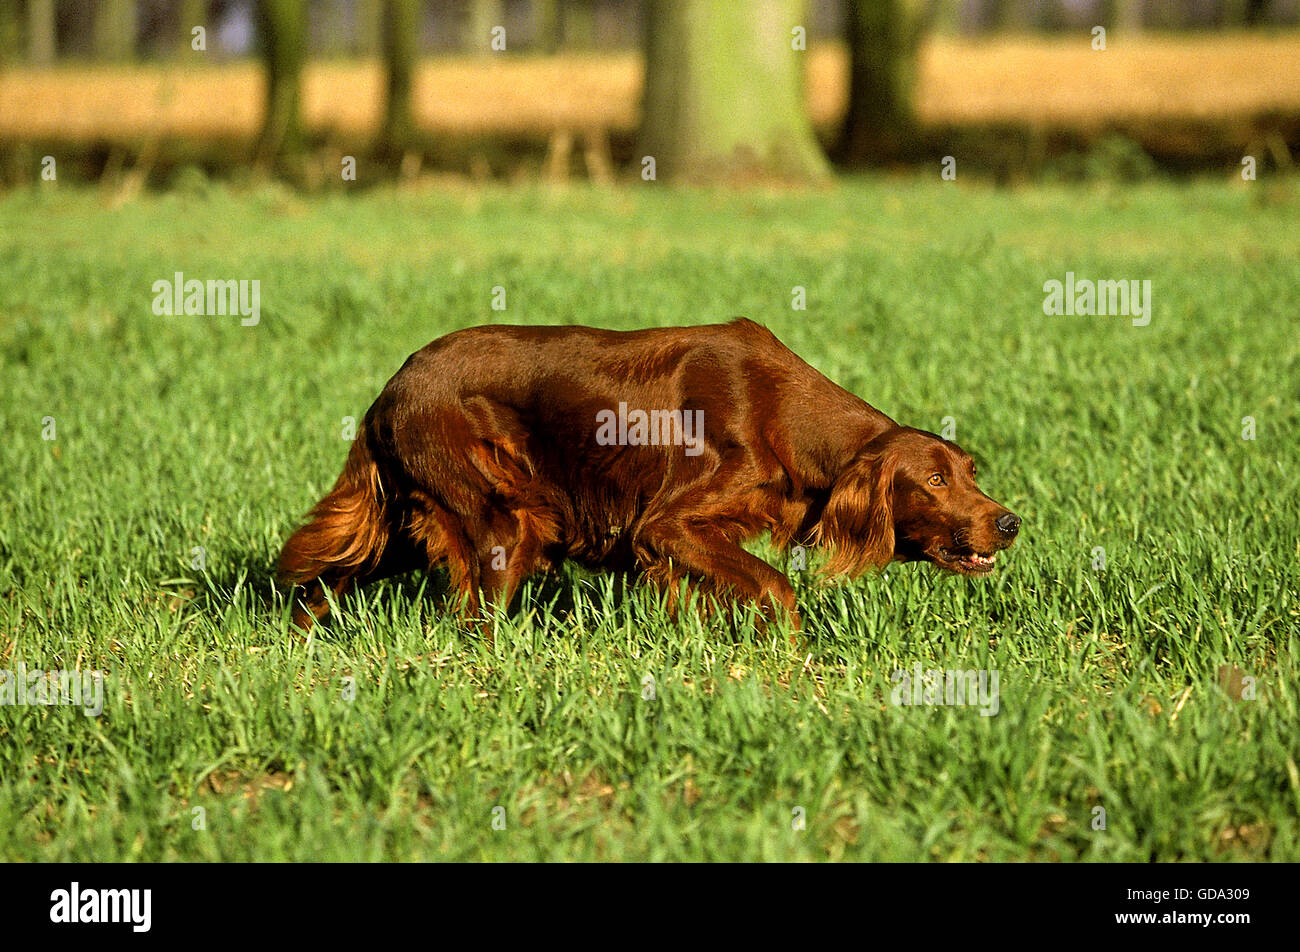 Irish Setter or Red Setter, Dog pointing Stock Photo